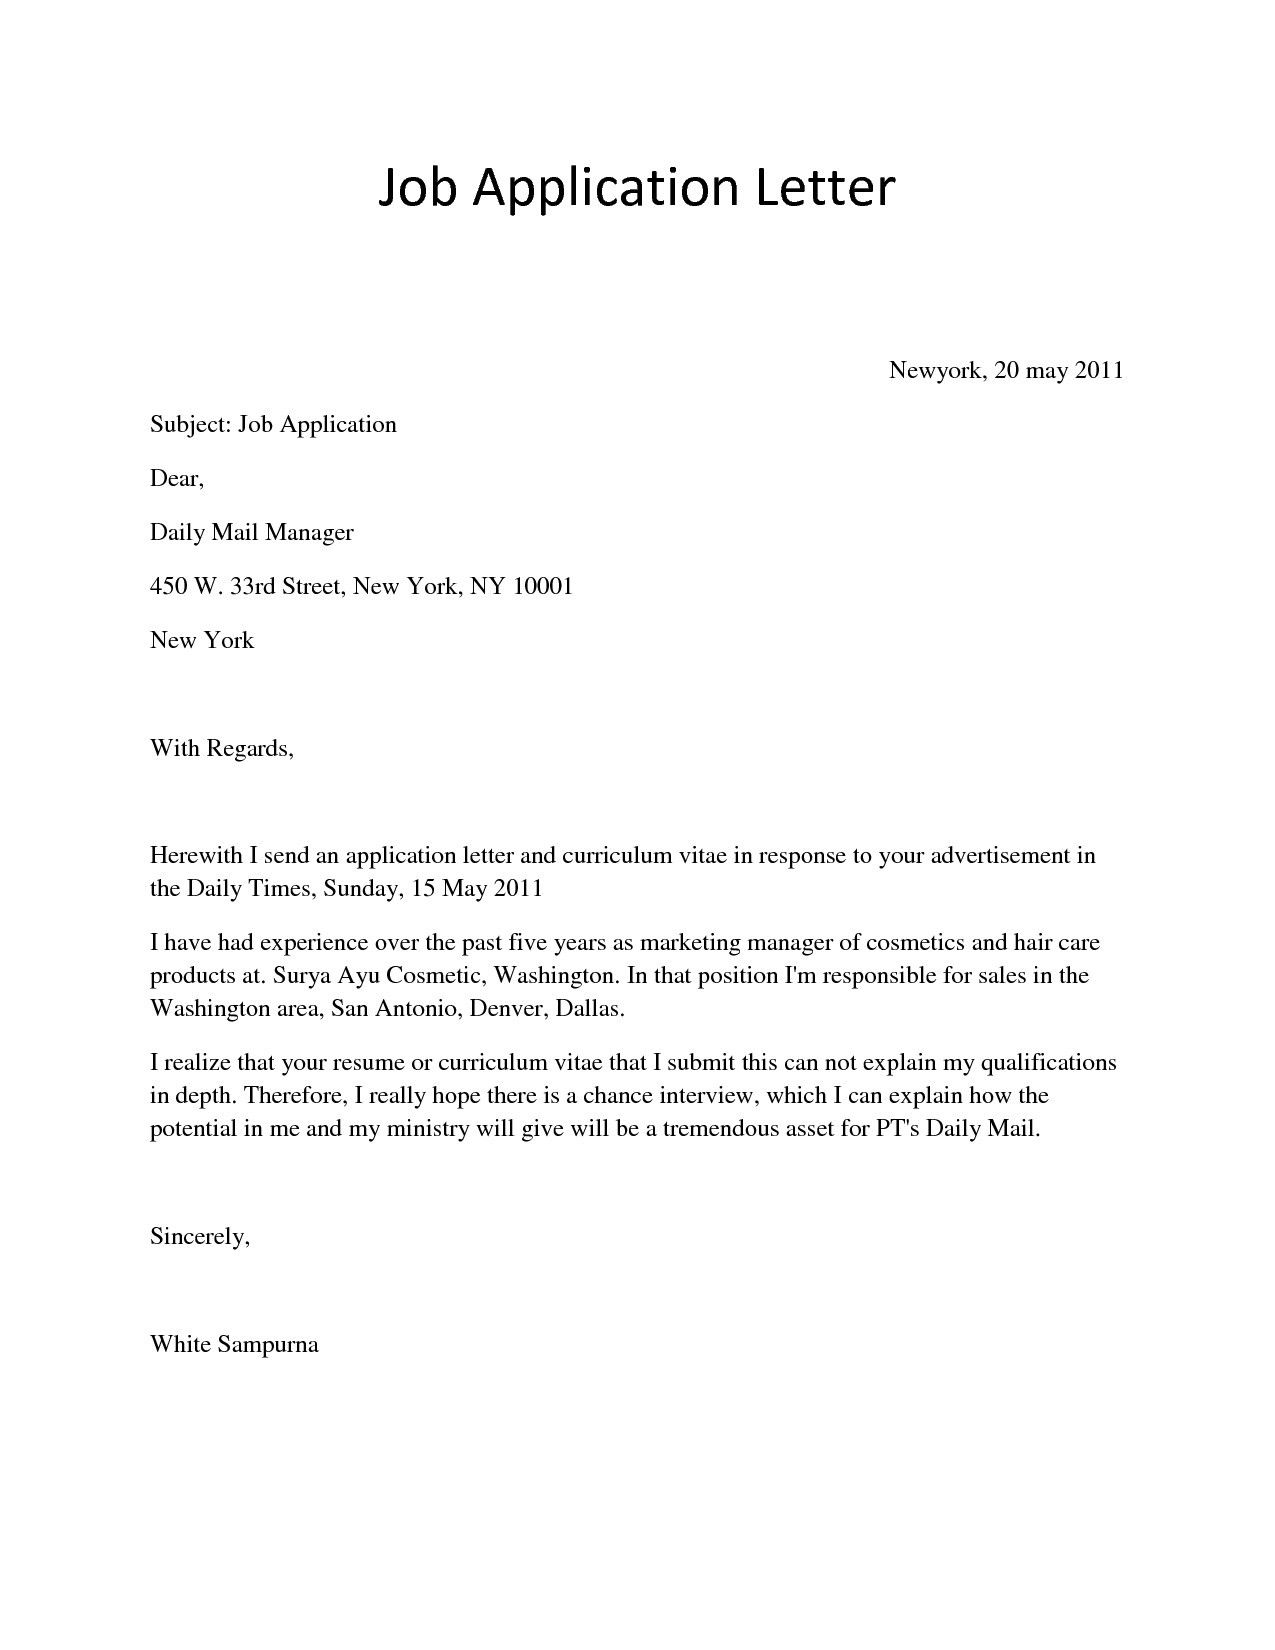 Best Application Letter For A Job